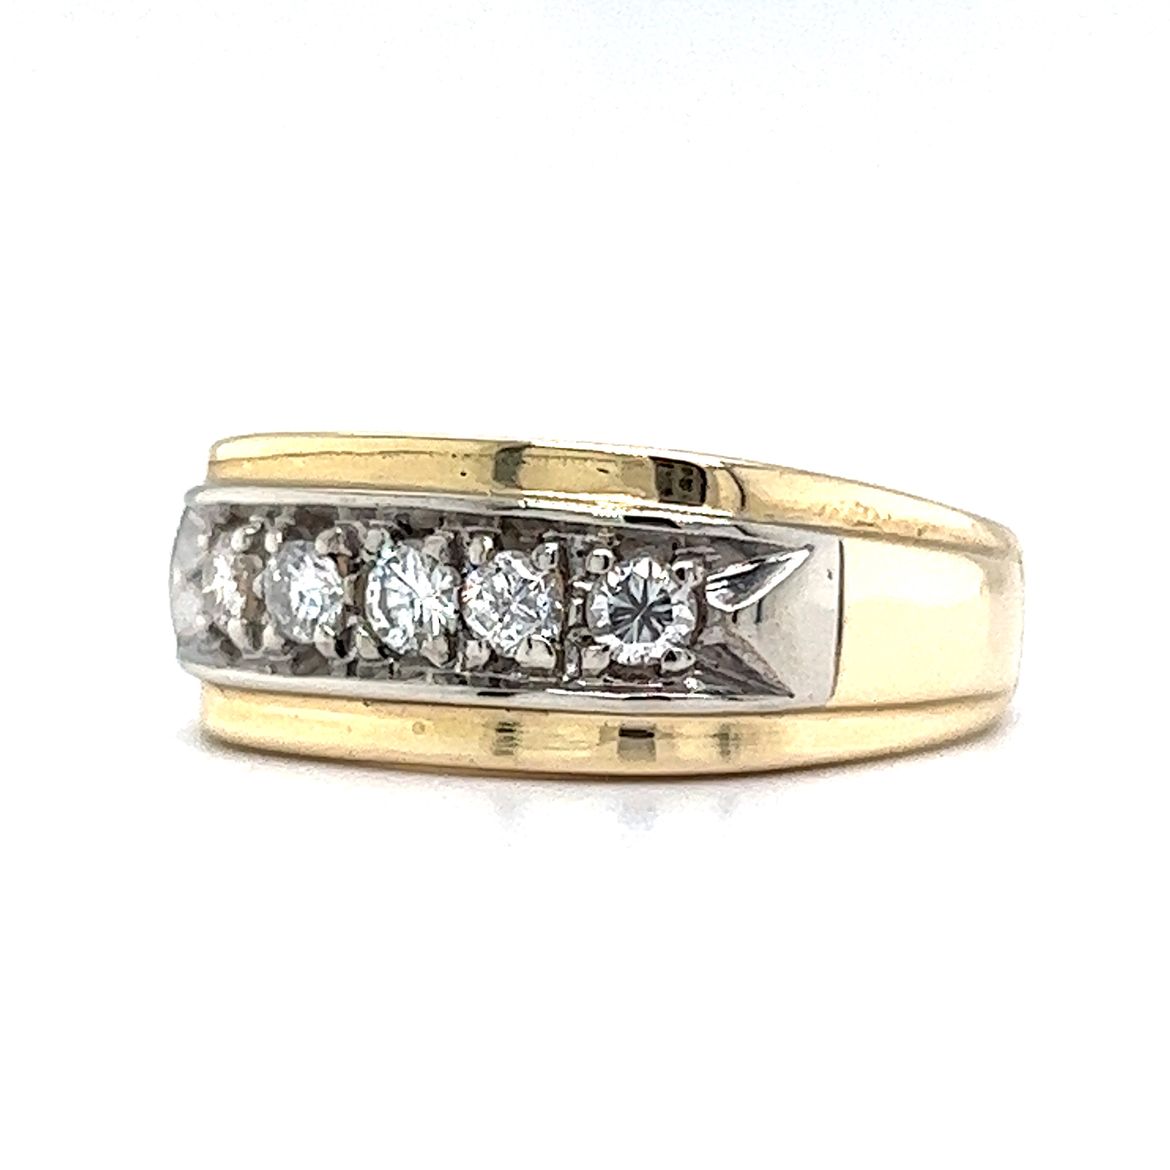 Vintage Men's Five Stone Diamond Ring in 14k Yellow Gold